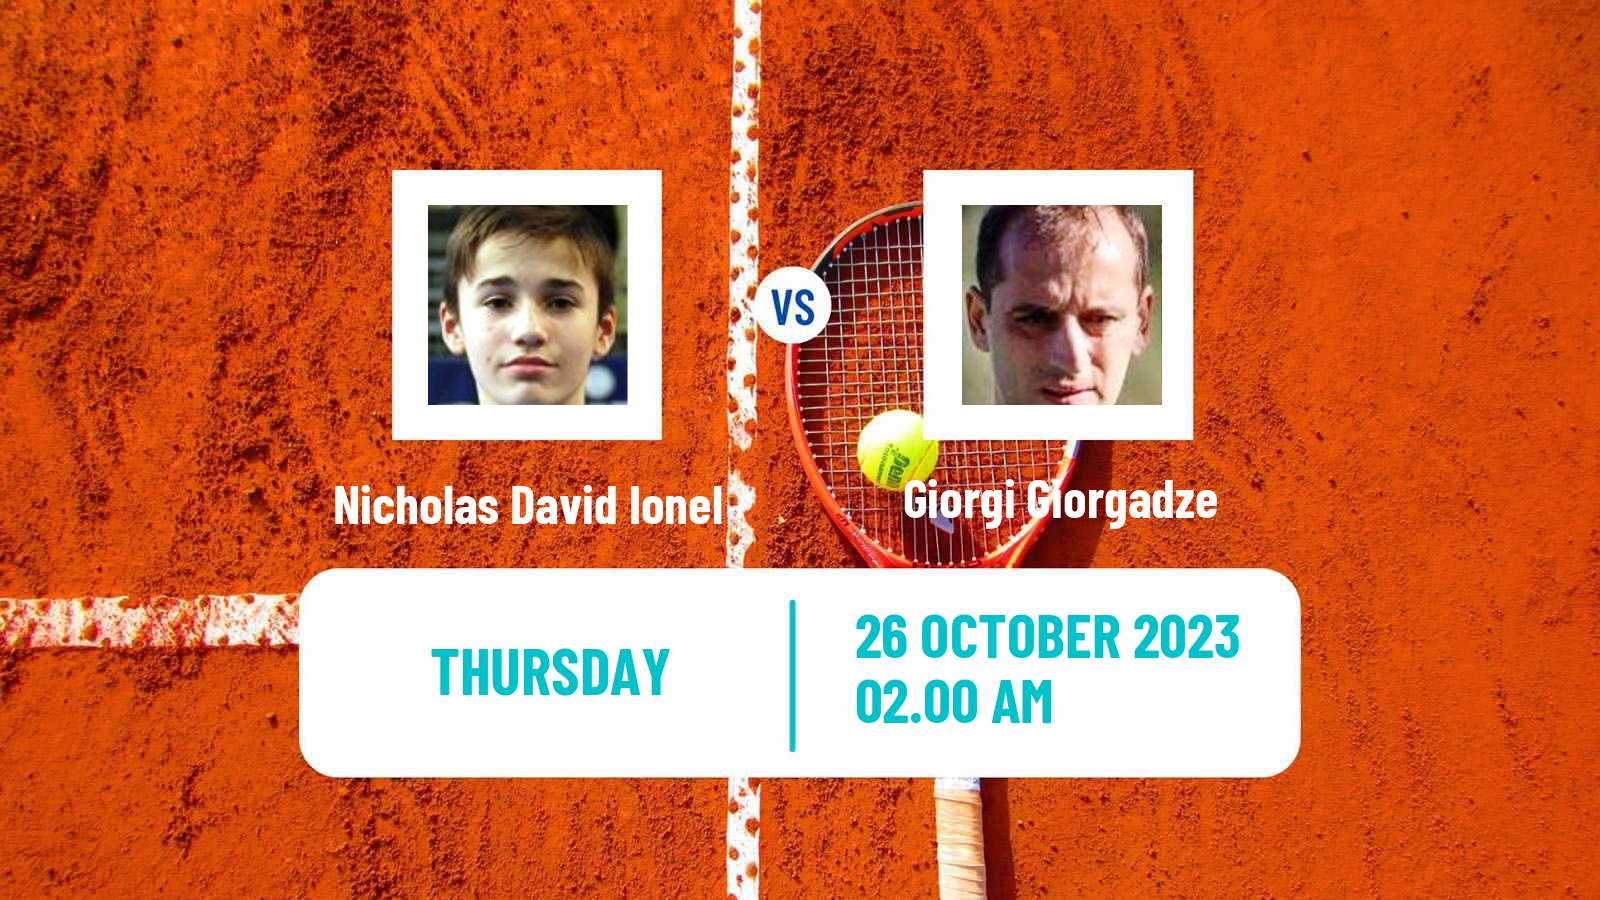 Tennis ITF M15 Telavi Men Nicholas David Ionel - Giorgi Giorgadze